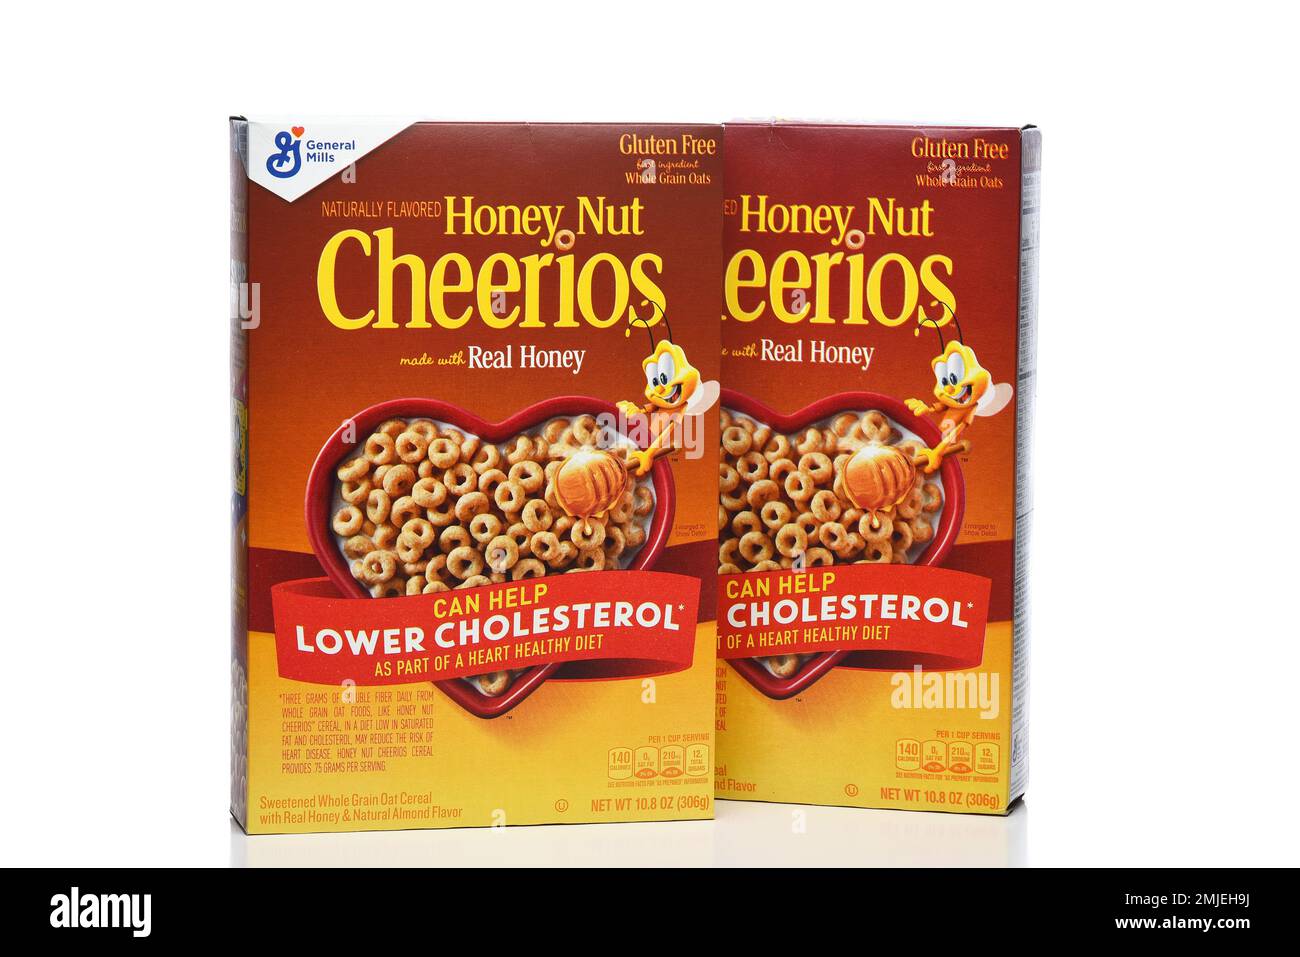 https://c8.alamy.com/comp/2MJEH9J/irvine-california-27-jan-2023-two-boxes-of-honey-nut-cheerios-breakfast-cereal-form-general-mills-2MJEH9J.jpg